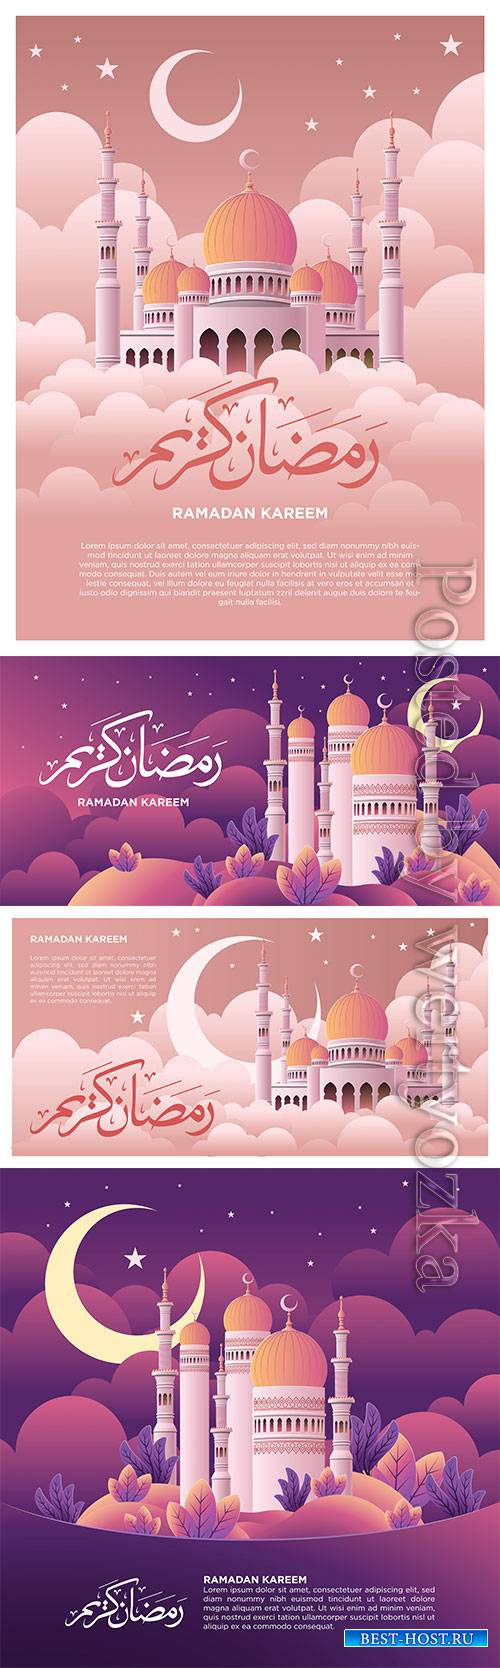 Mosque on the sky illustration for Ramadan Kareem vector background